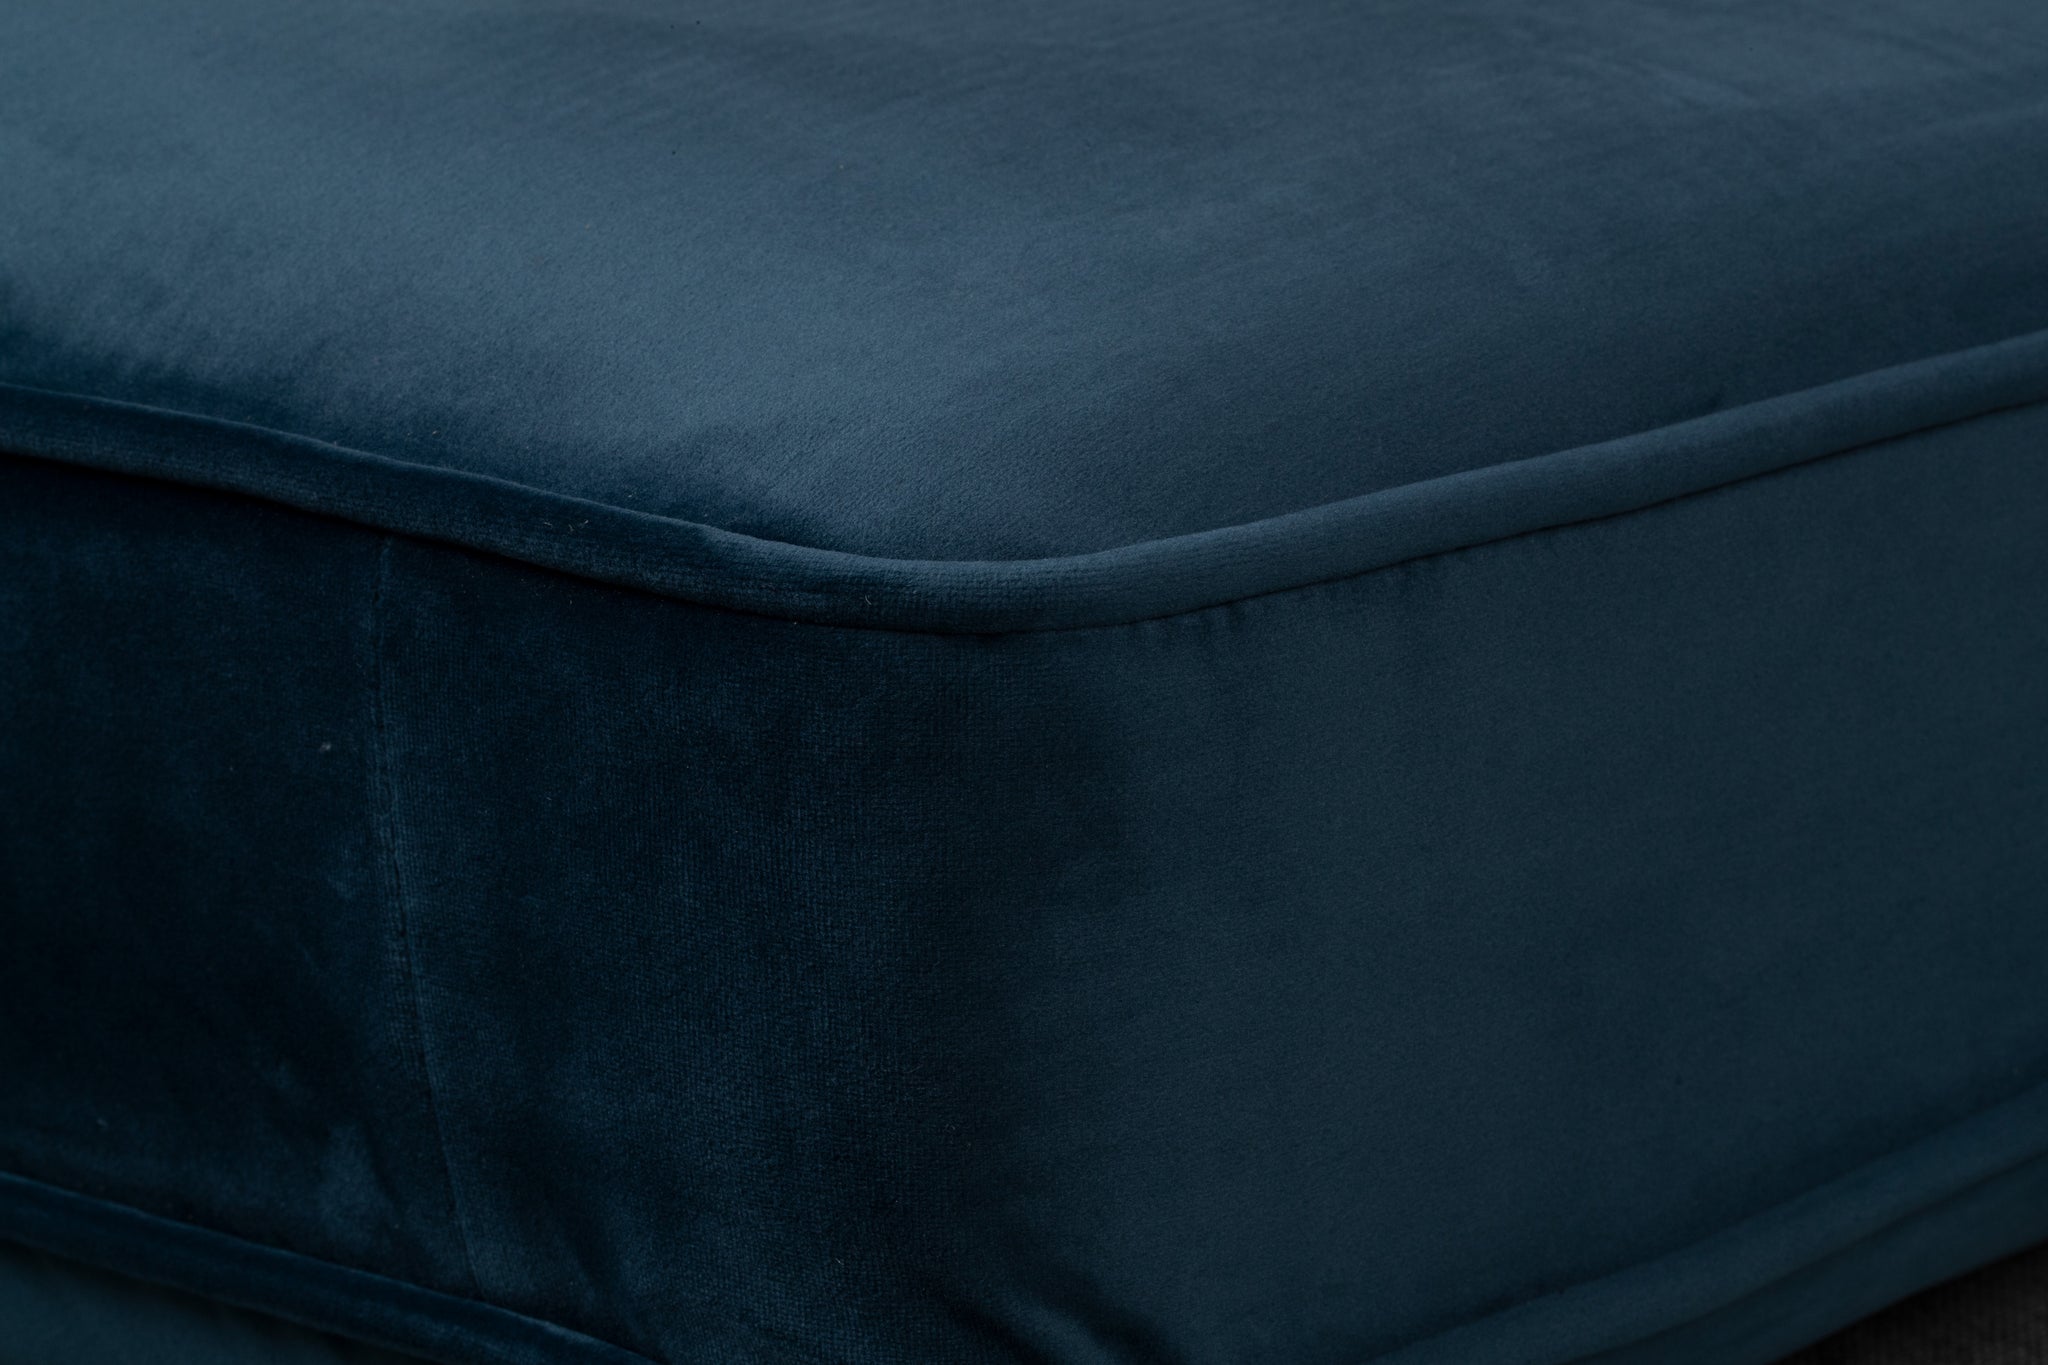 albany sofa shown in blue velvet with gold legs